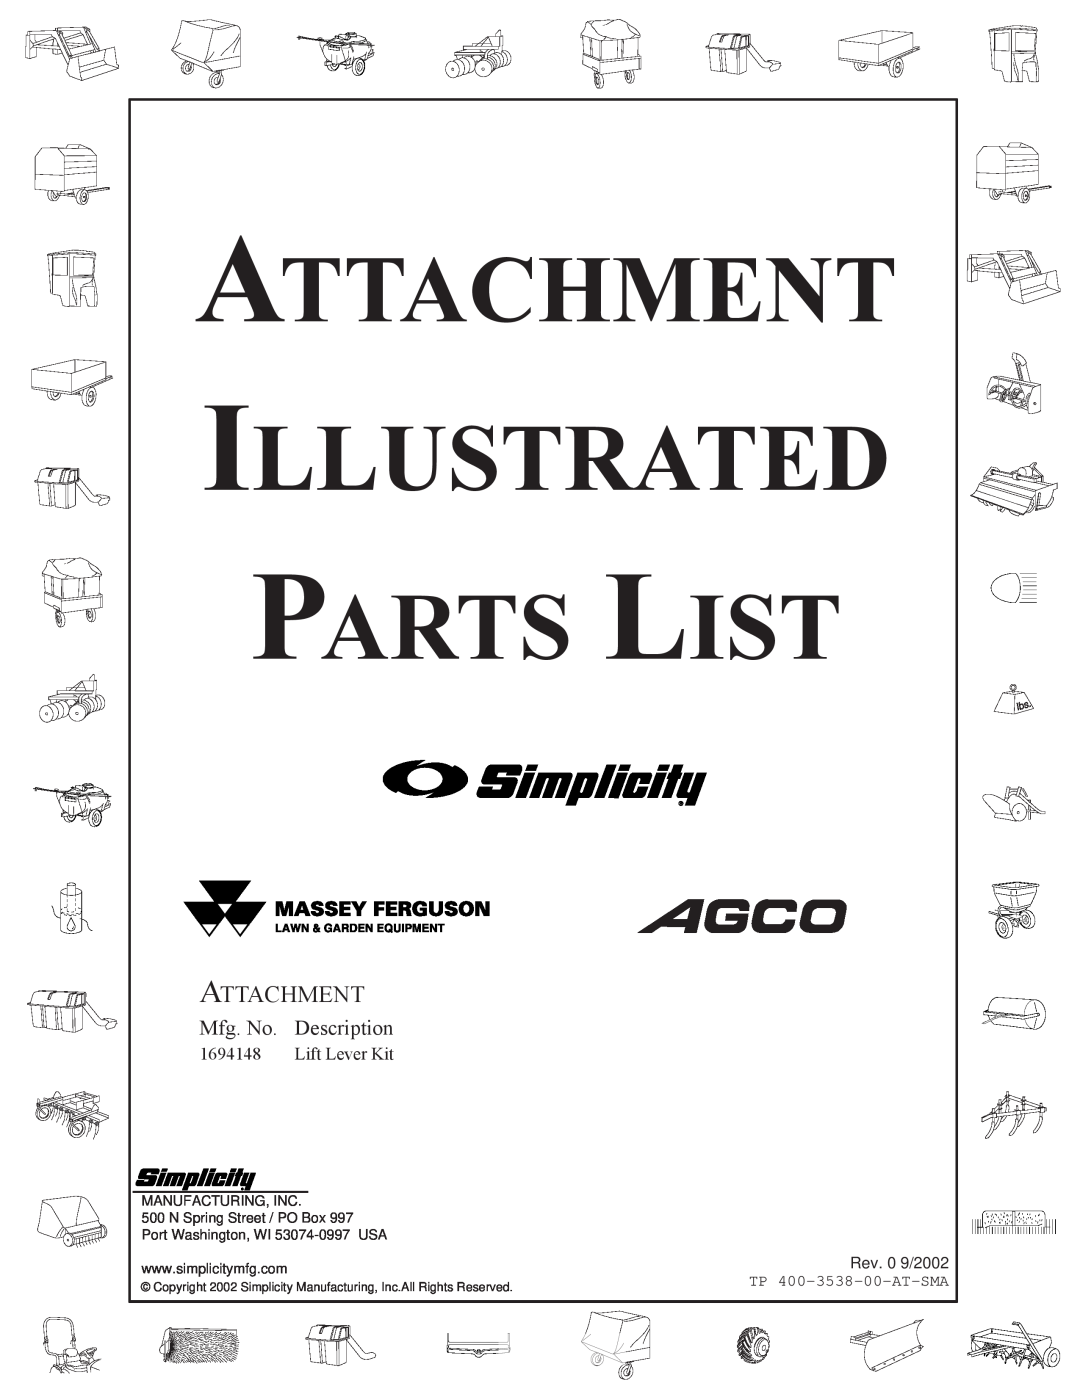 Snapper 3538 manual Attachment Illustrated Parts List, Mfg. No. Description, Lift Lever Kit, Rev. 0 9/2002 